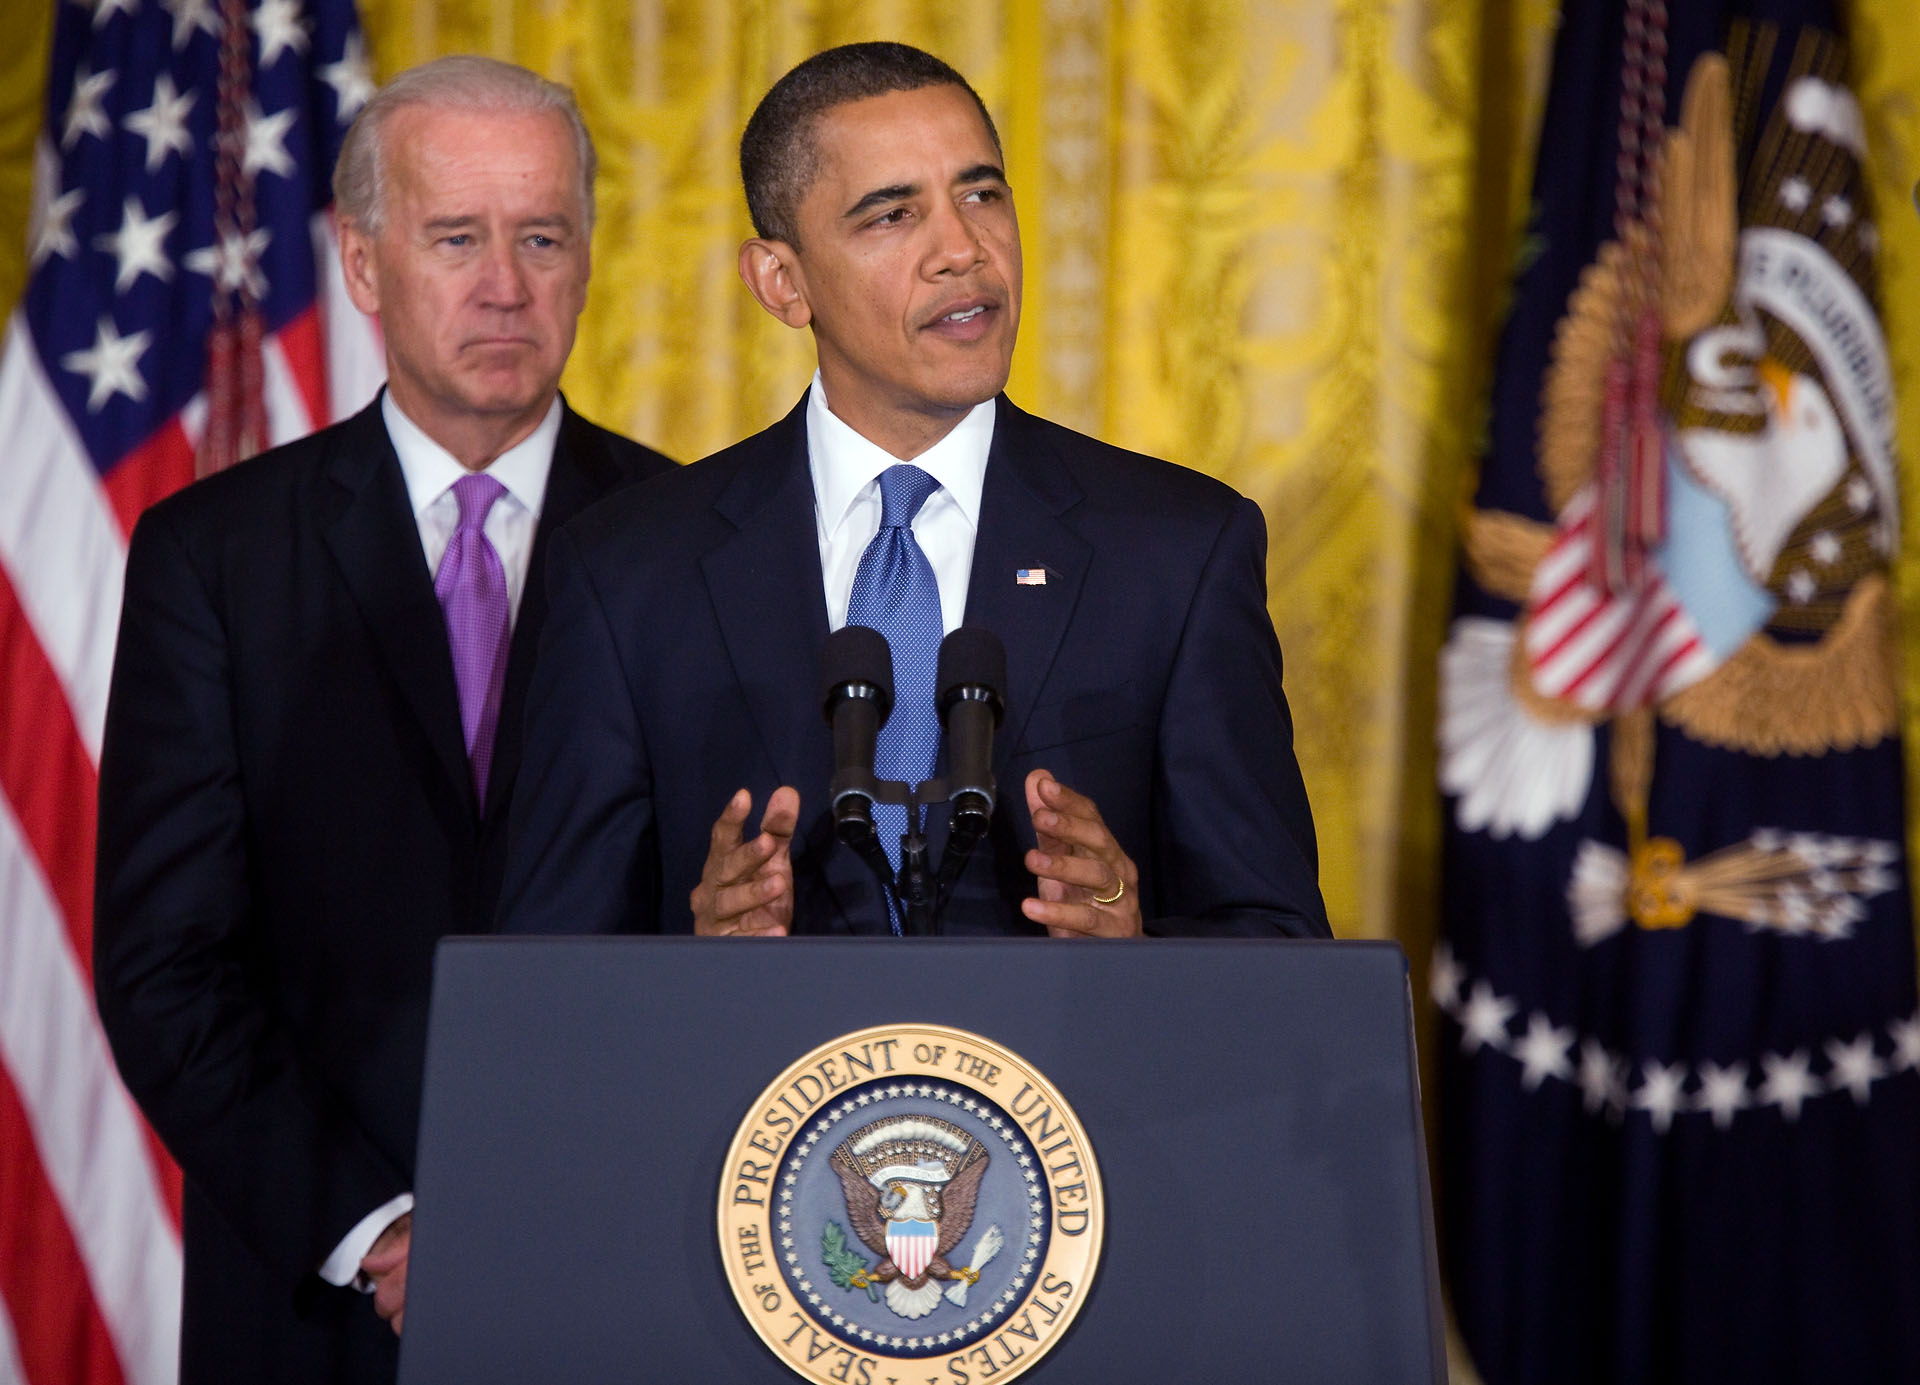 President Obama speaks at a Violence Against Women Awareness Event